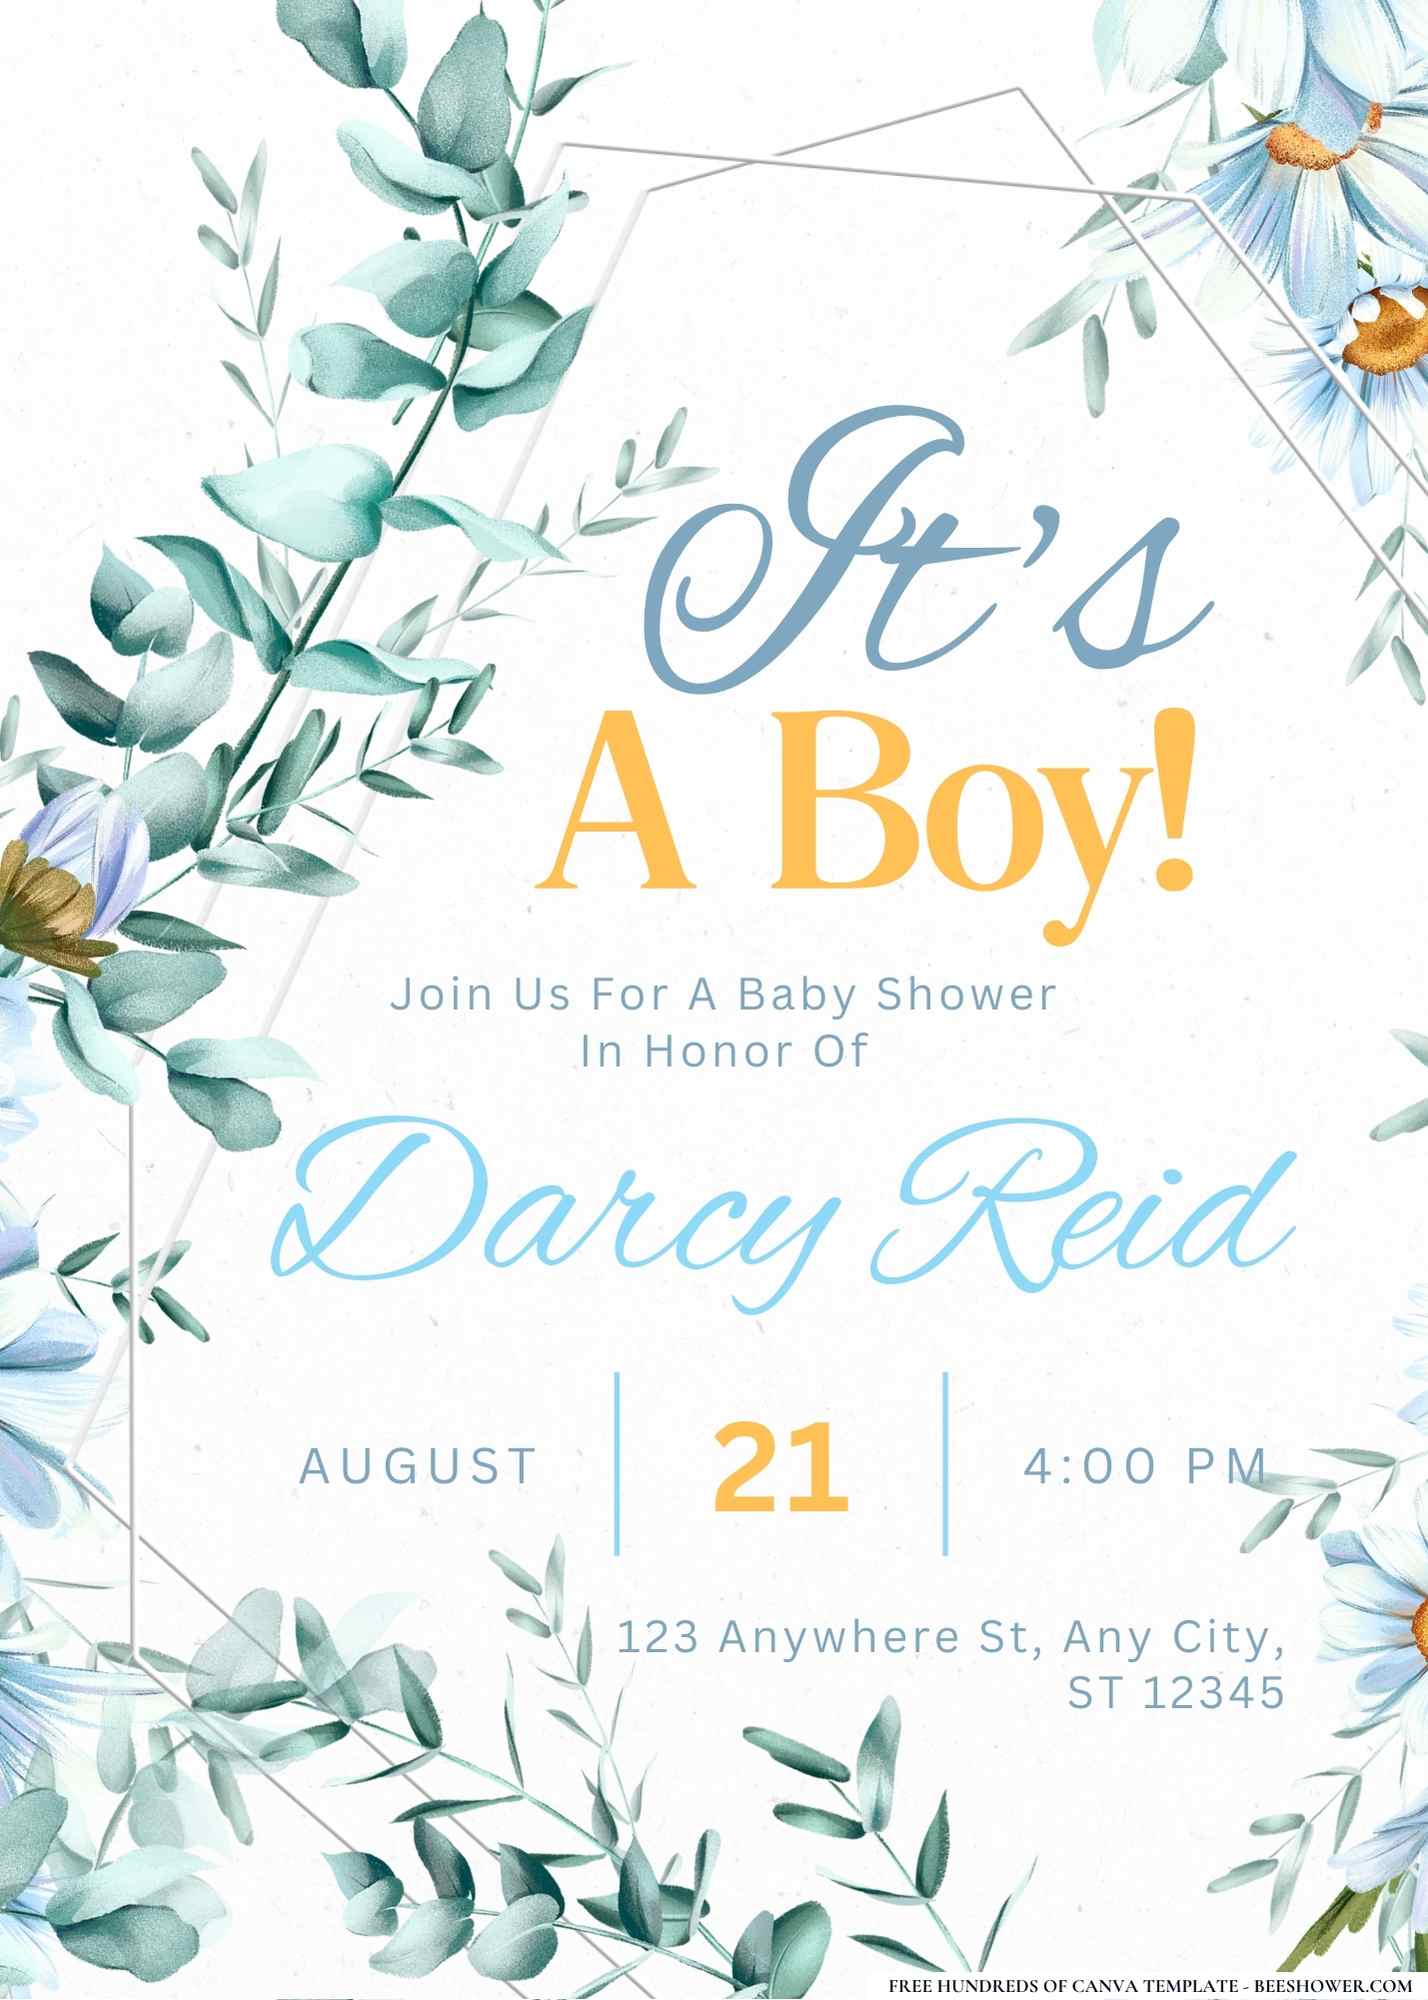 Daisy Dreams Unveiled Baby Shower Invitation